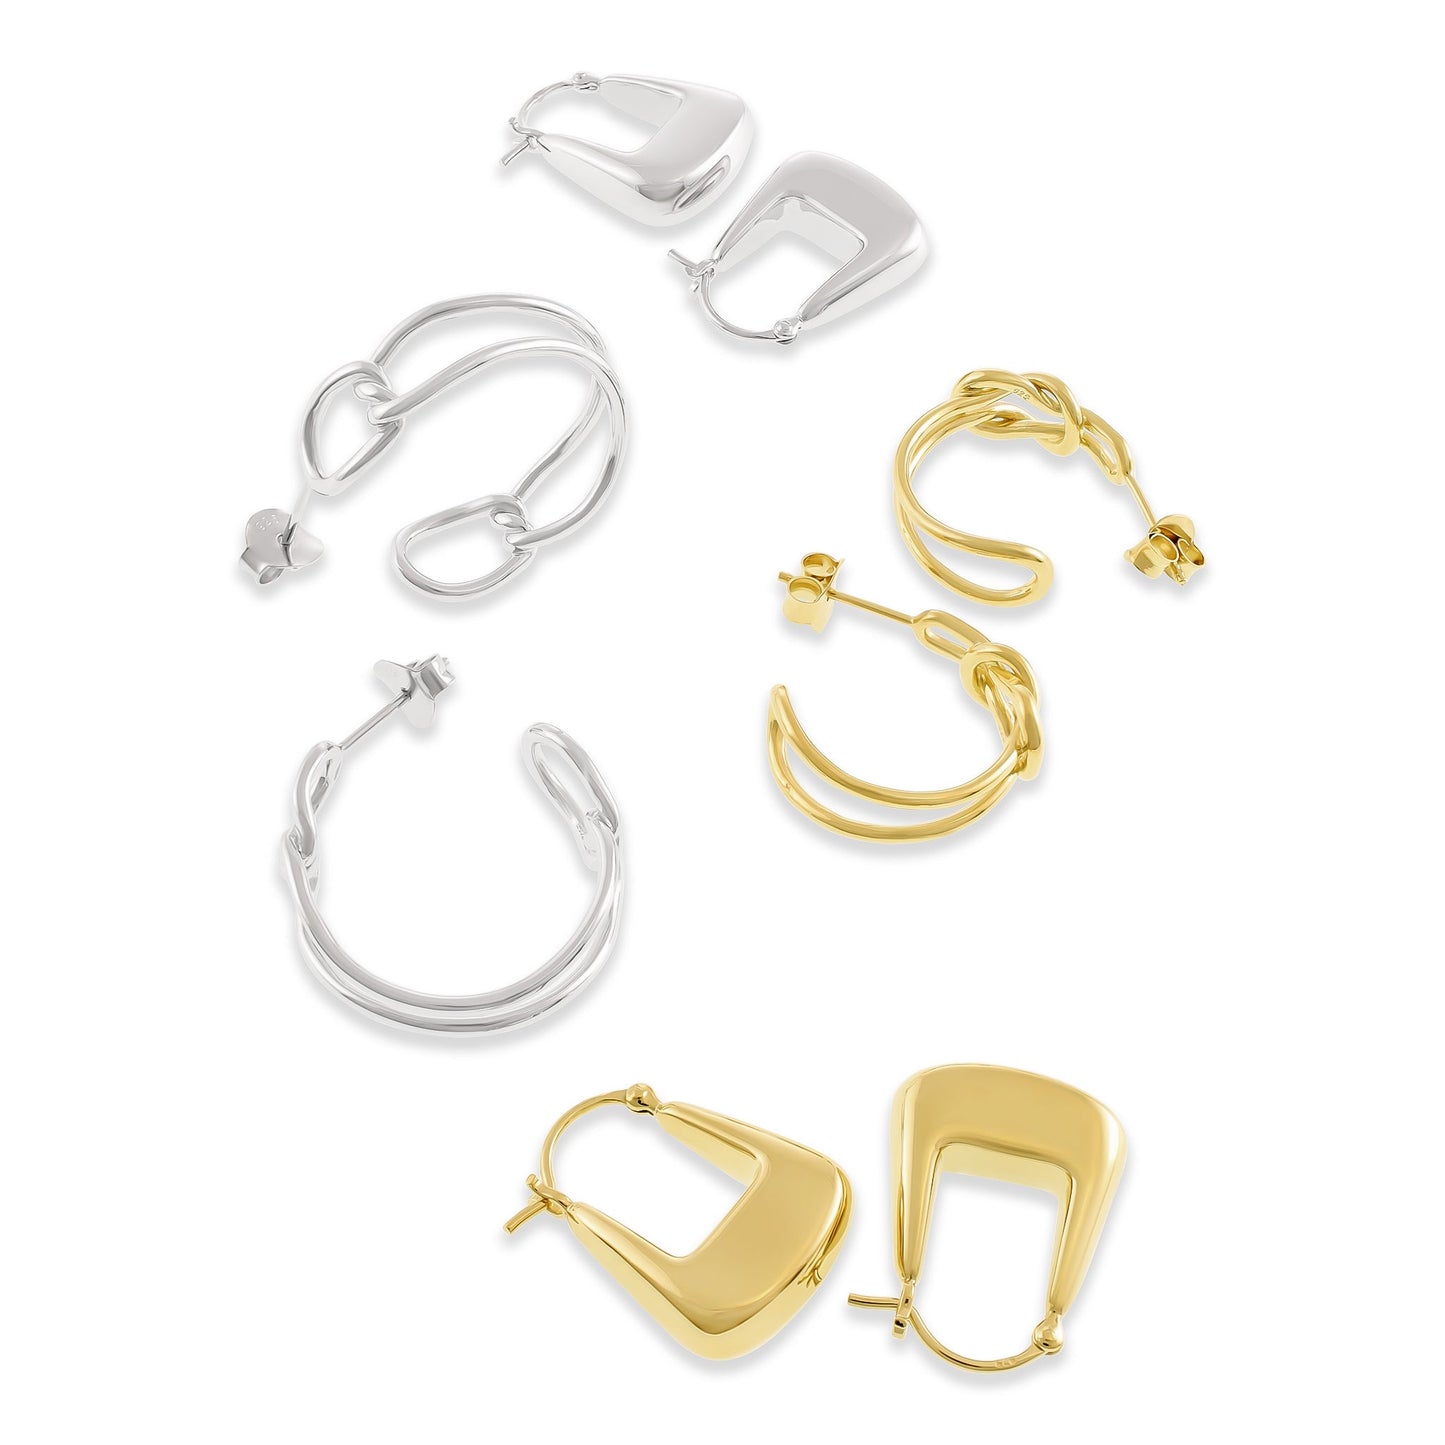 14ct 1 micron gold plated sterling silver Art-deco hoop earrings PER1004 - FJewellery